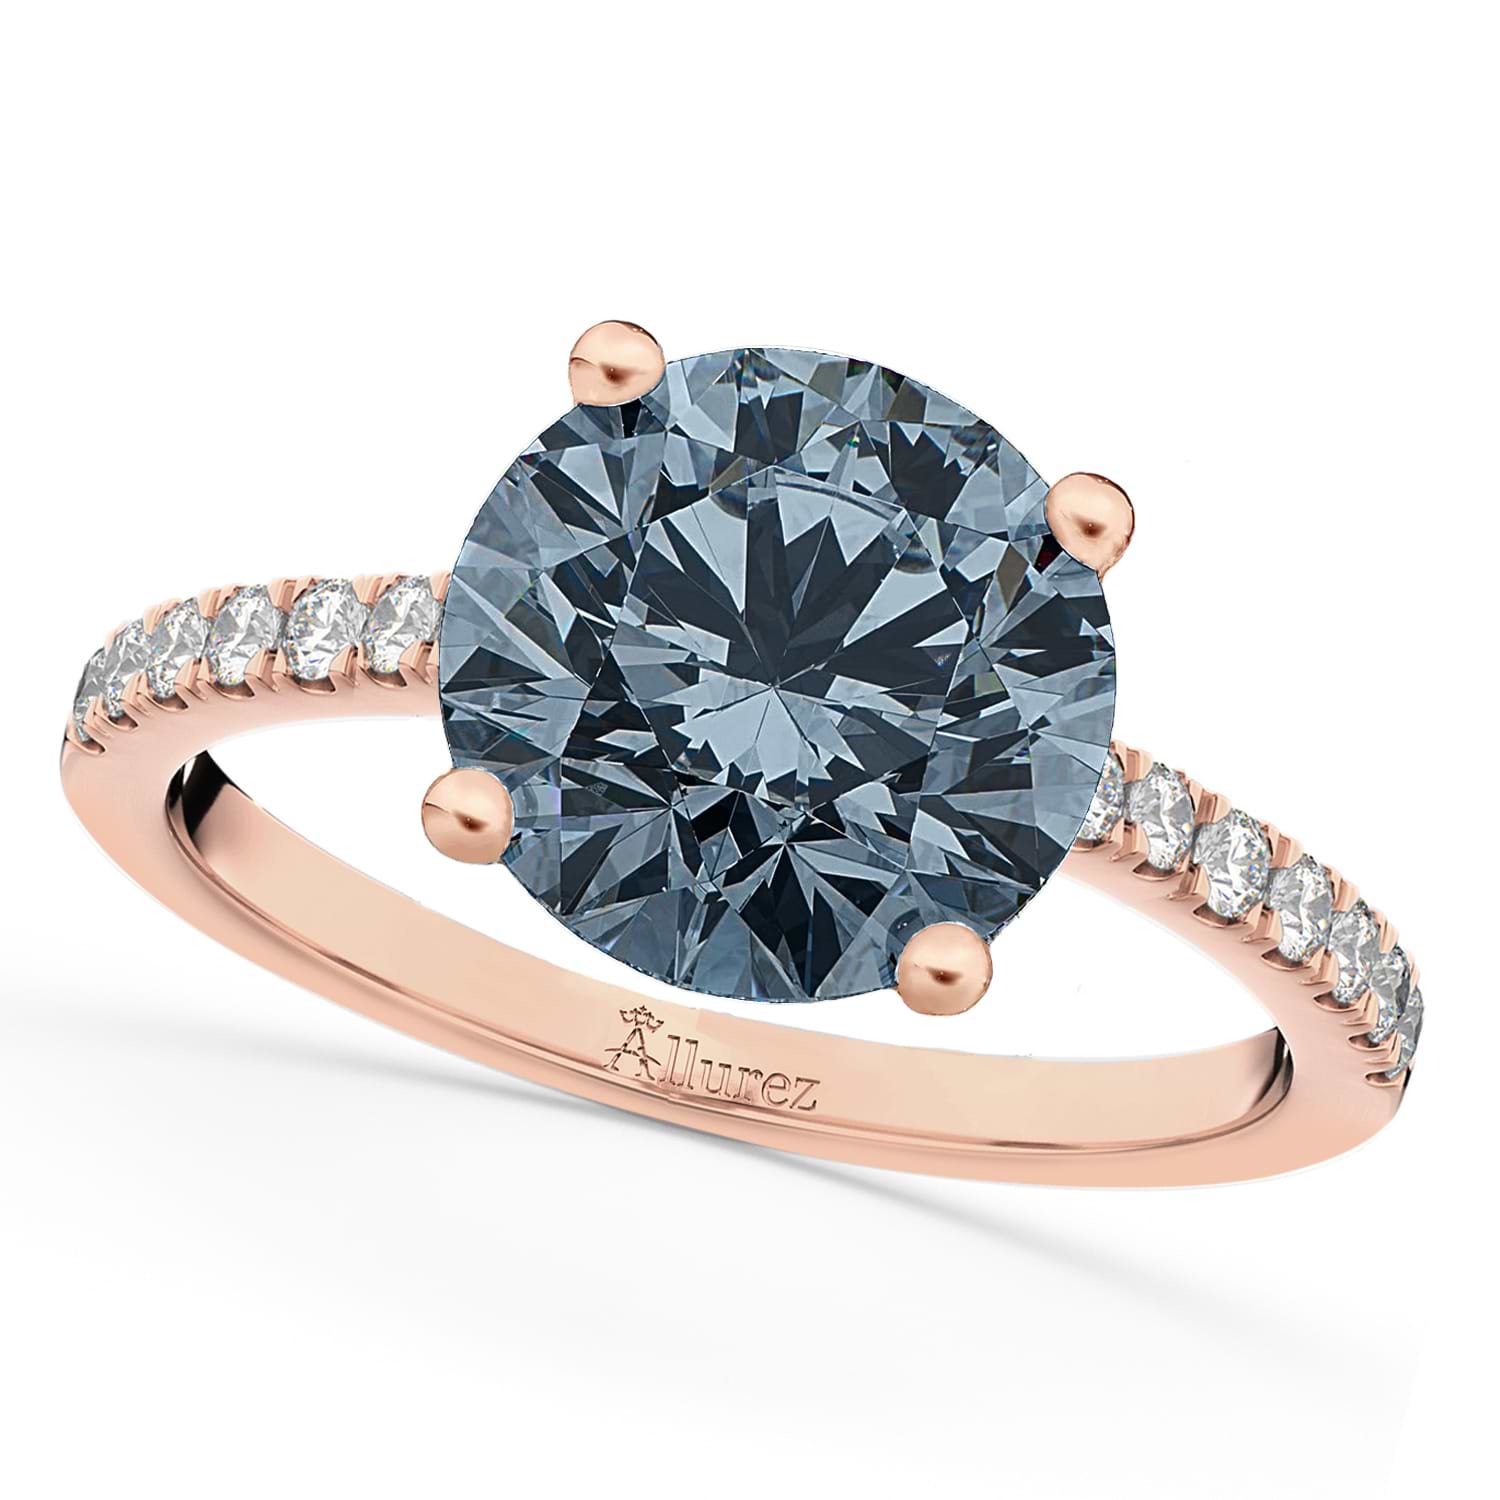 Gray Spinel & Diamond Engagement Ring 18K Rose Gold 2.01ct